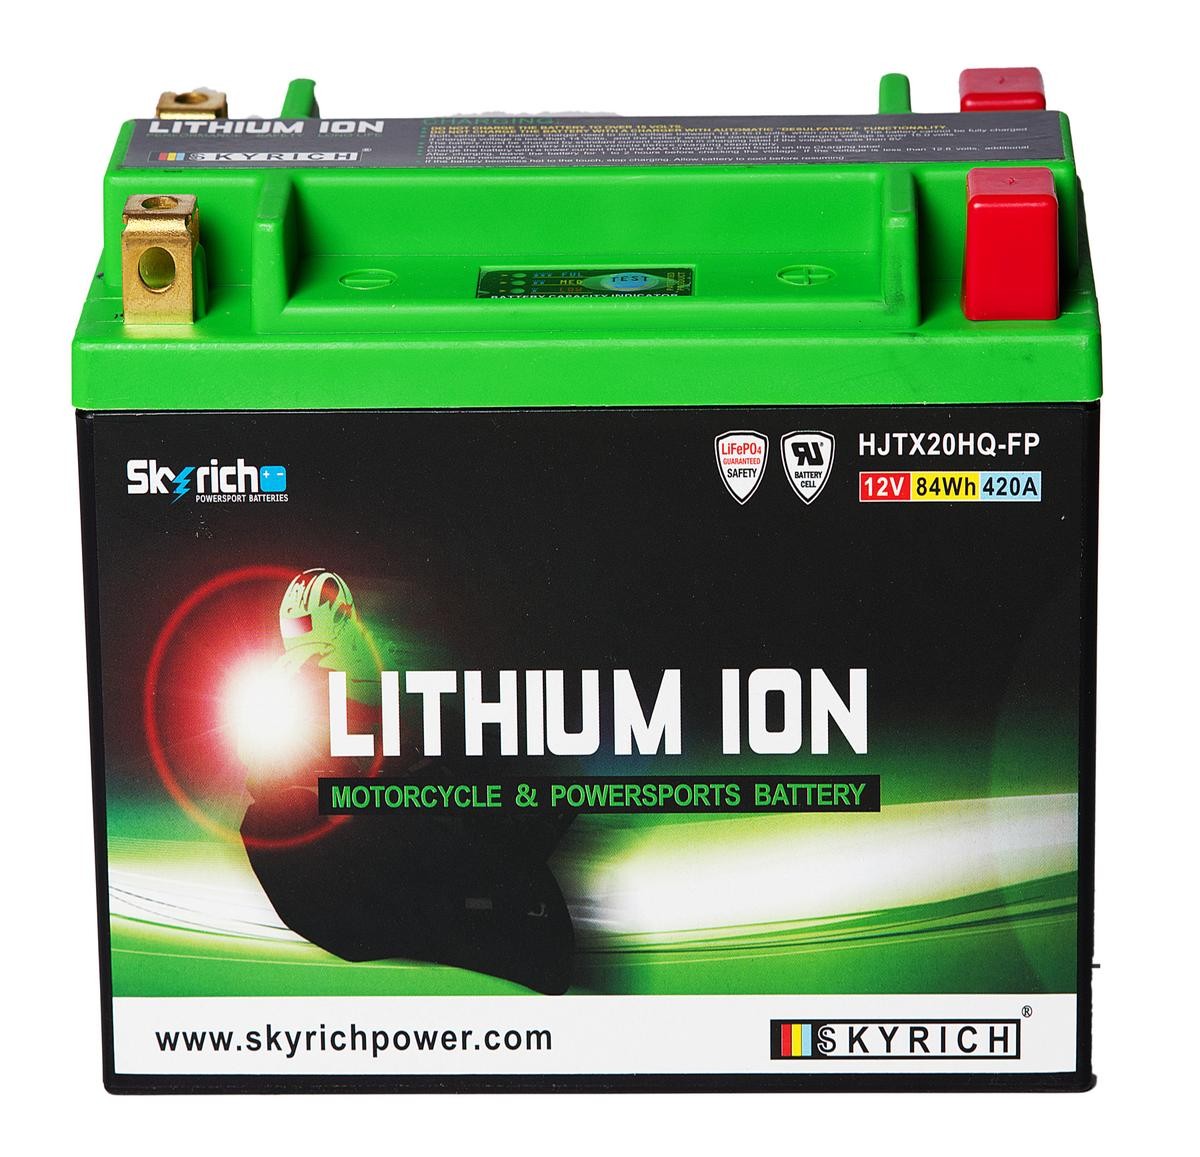 HONDA VF Batterie 12V 7Ah 420A N Li-Ionen-Batterie SKYRICH LITHIUM ION HJTX20HQ-FP